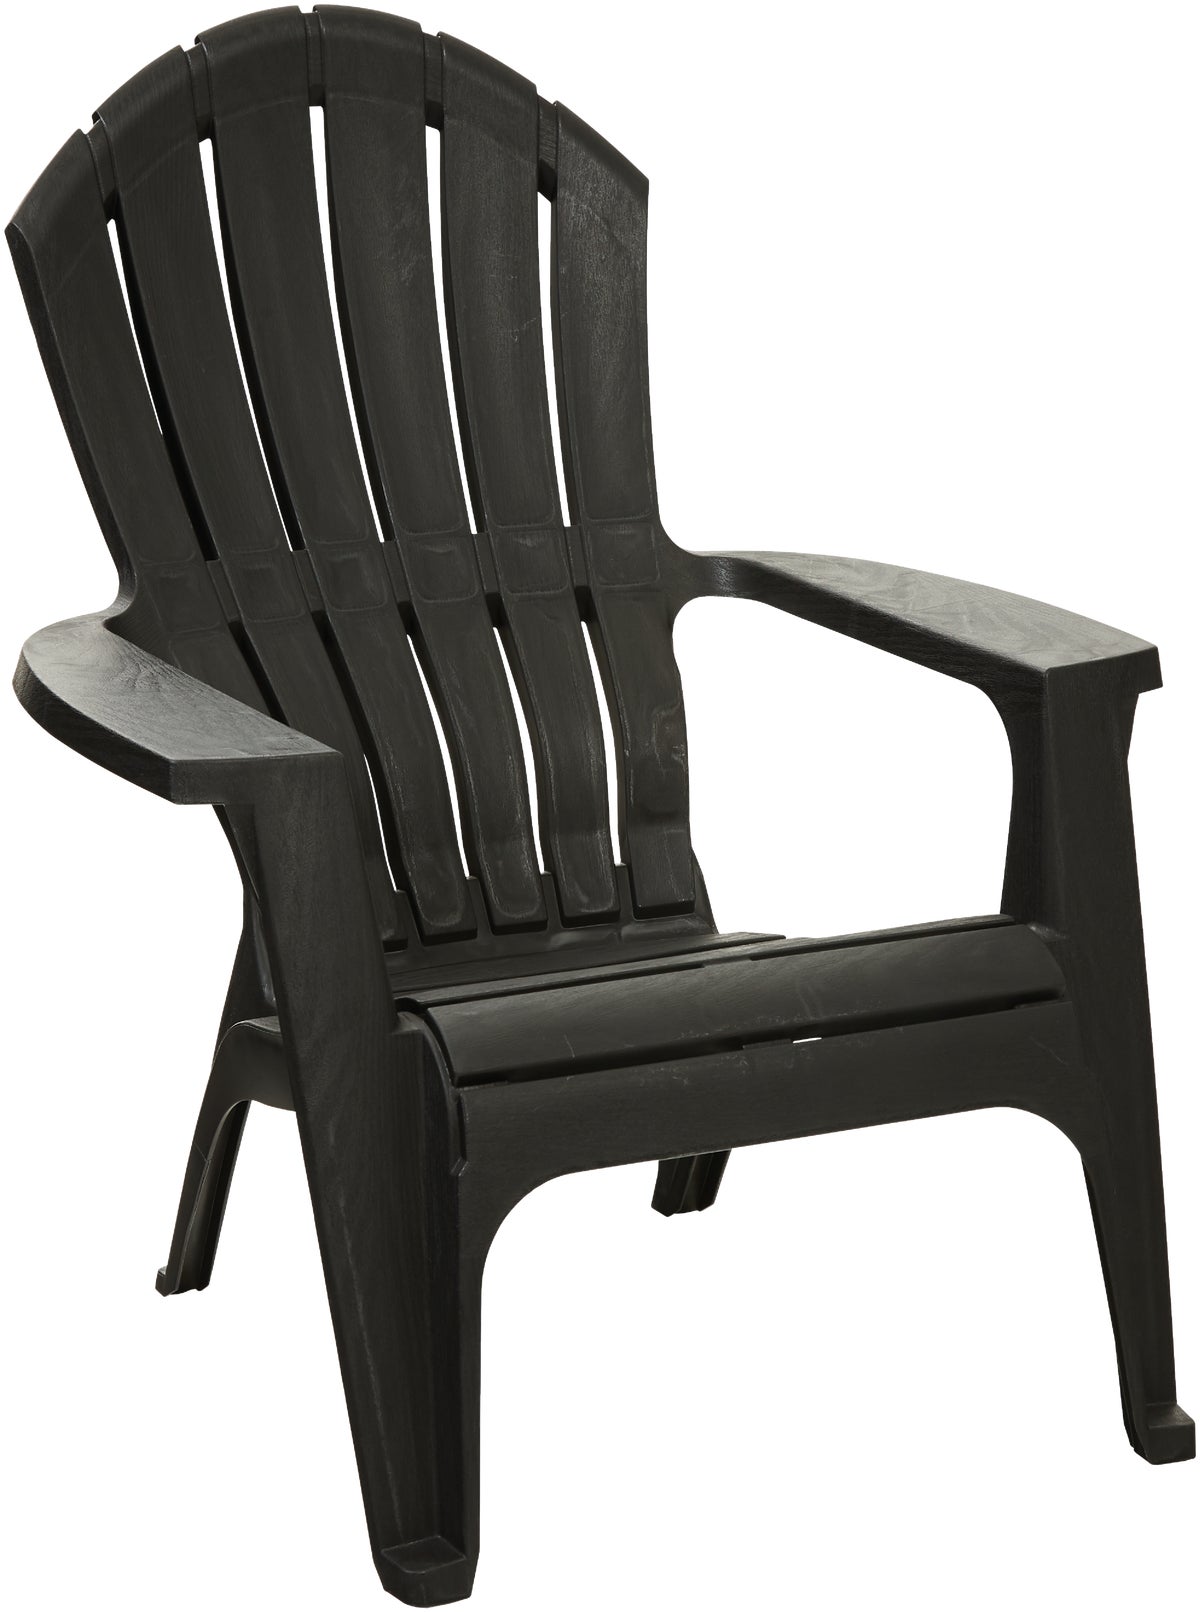 Buy Adams RealComfort Ergonomic Adirondack Chair Black